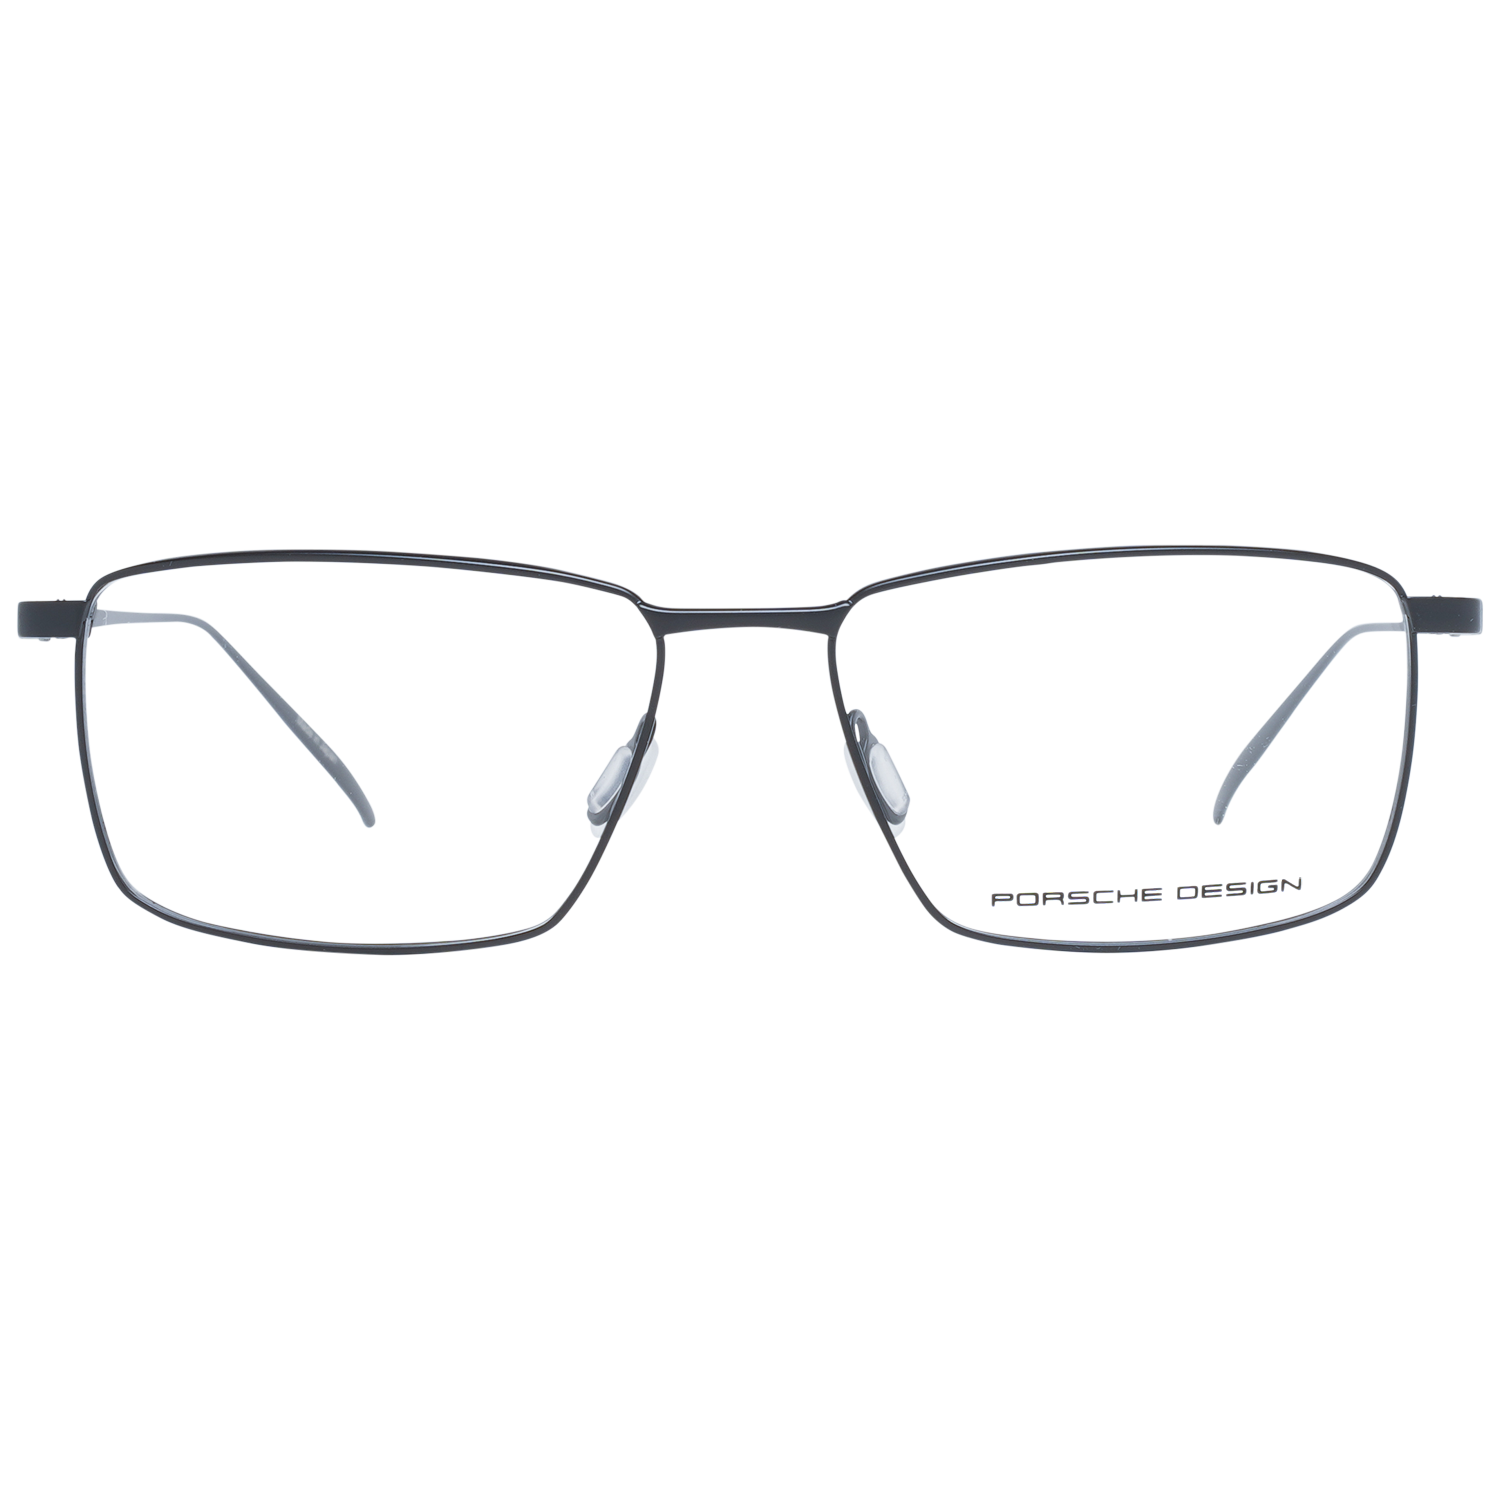 Porsche Design Eyeglasses Porsche Design Glasses Frames P8373 A 56mm Titanium Eyeglasses Eyewear UK USA Australia 